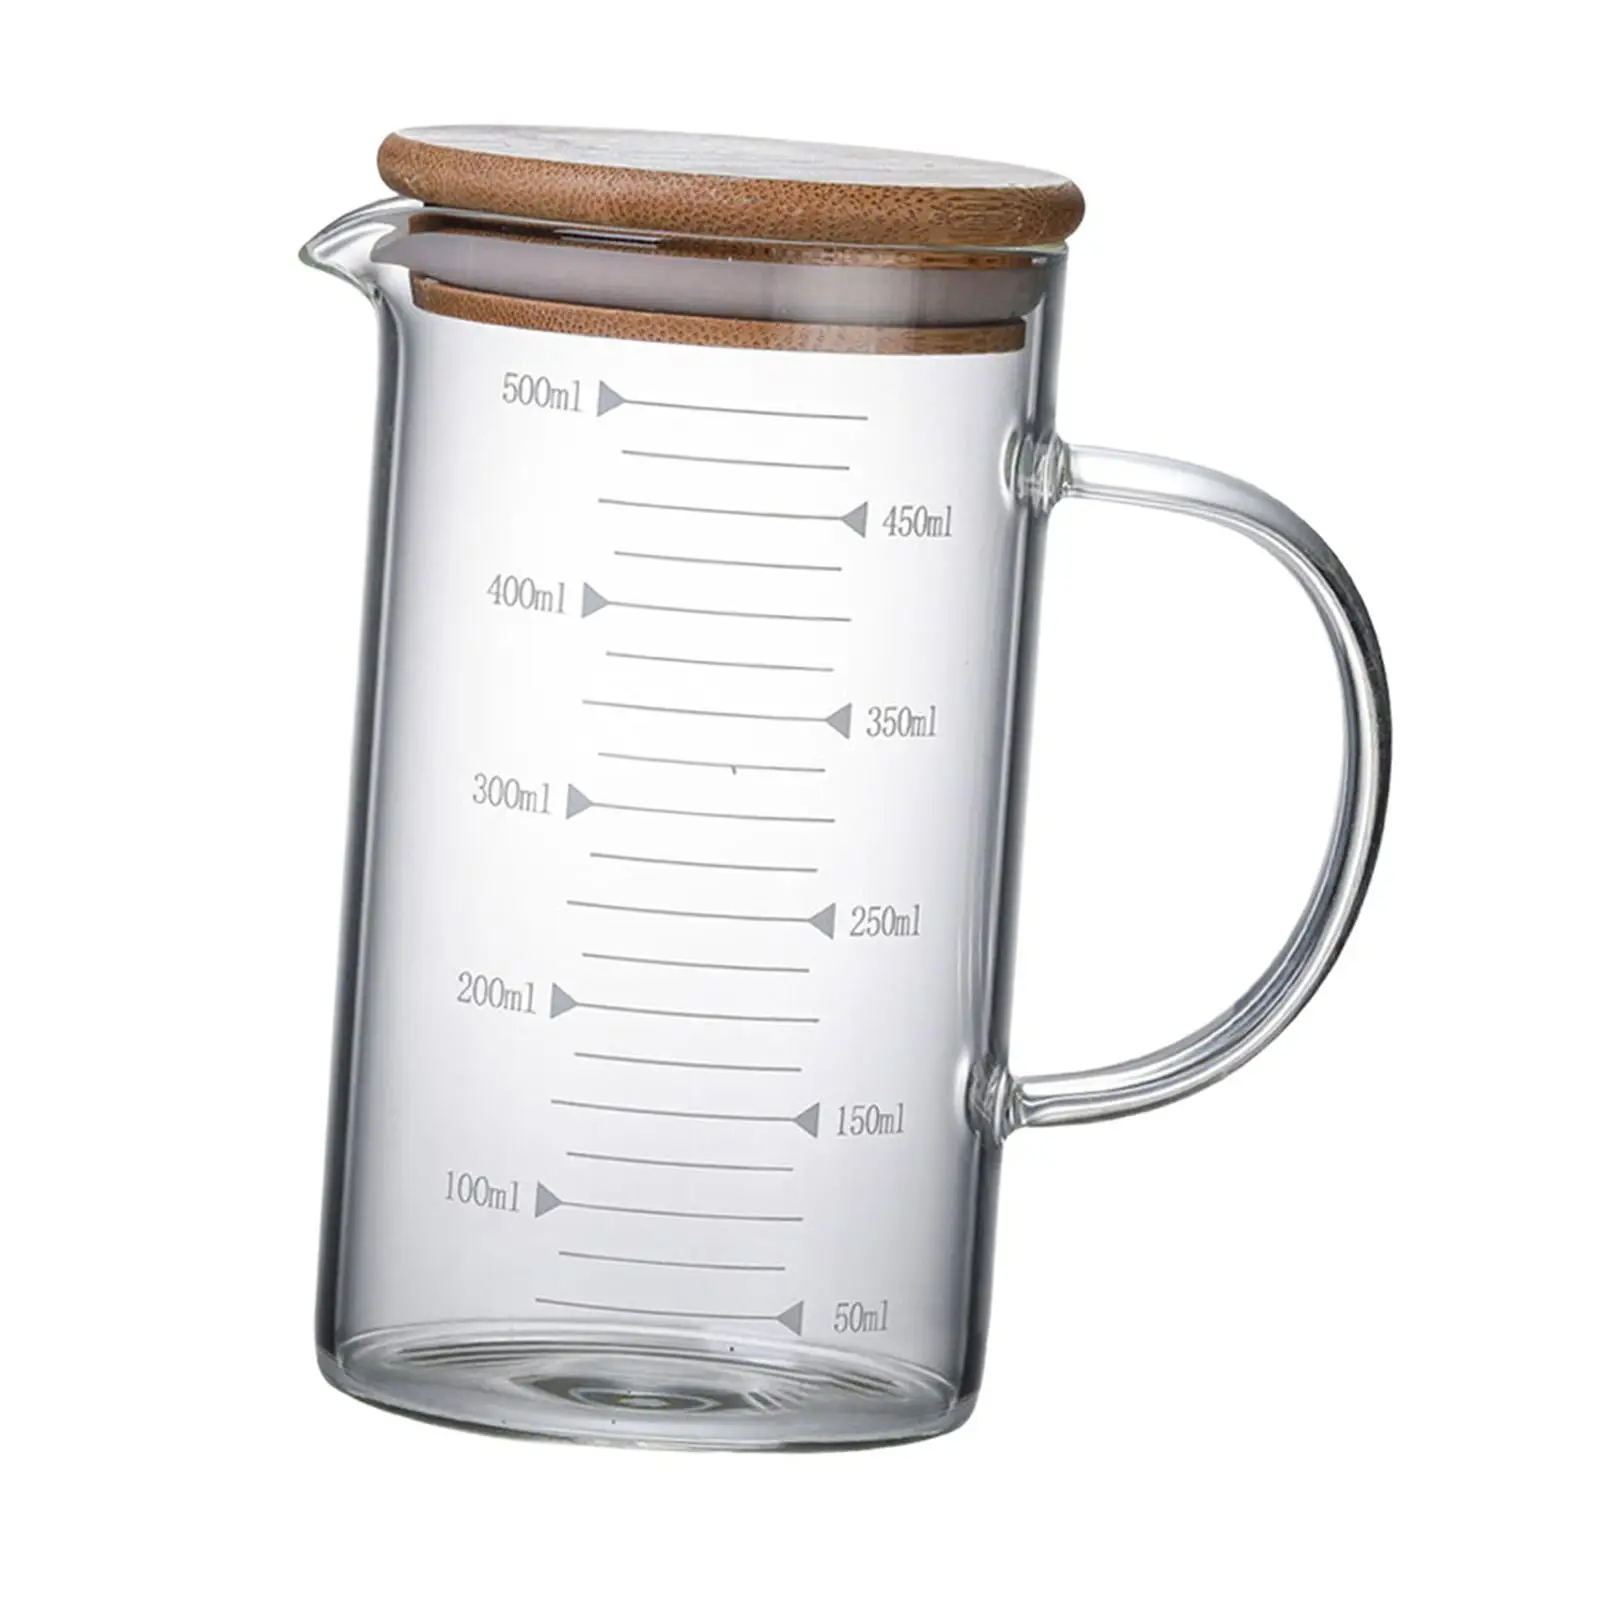 Measuring Milk Glass Cup with Scale, Fridge Juice Jug Household Transparent